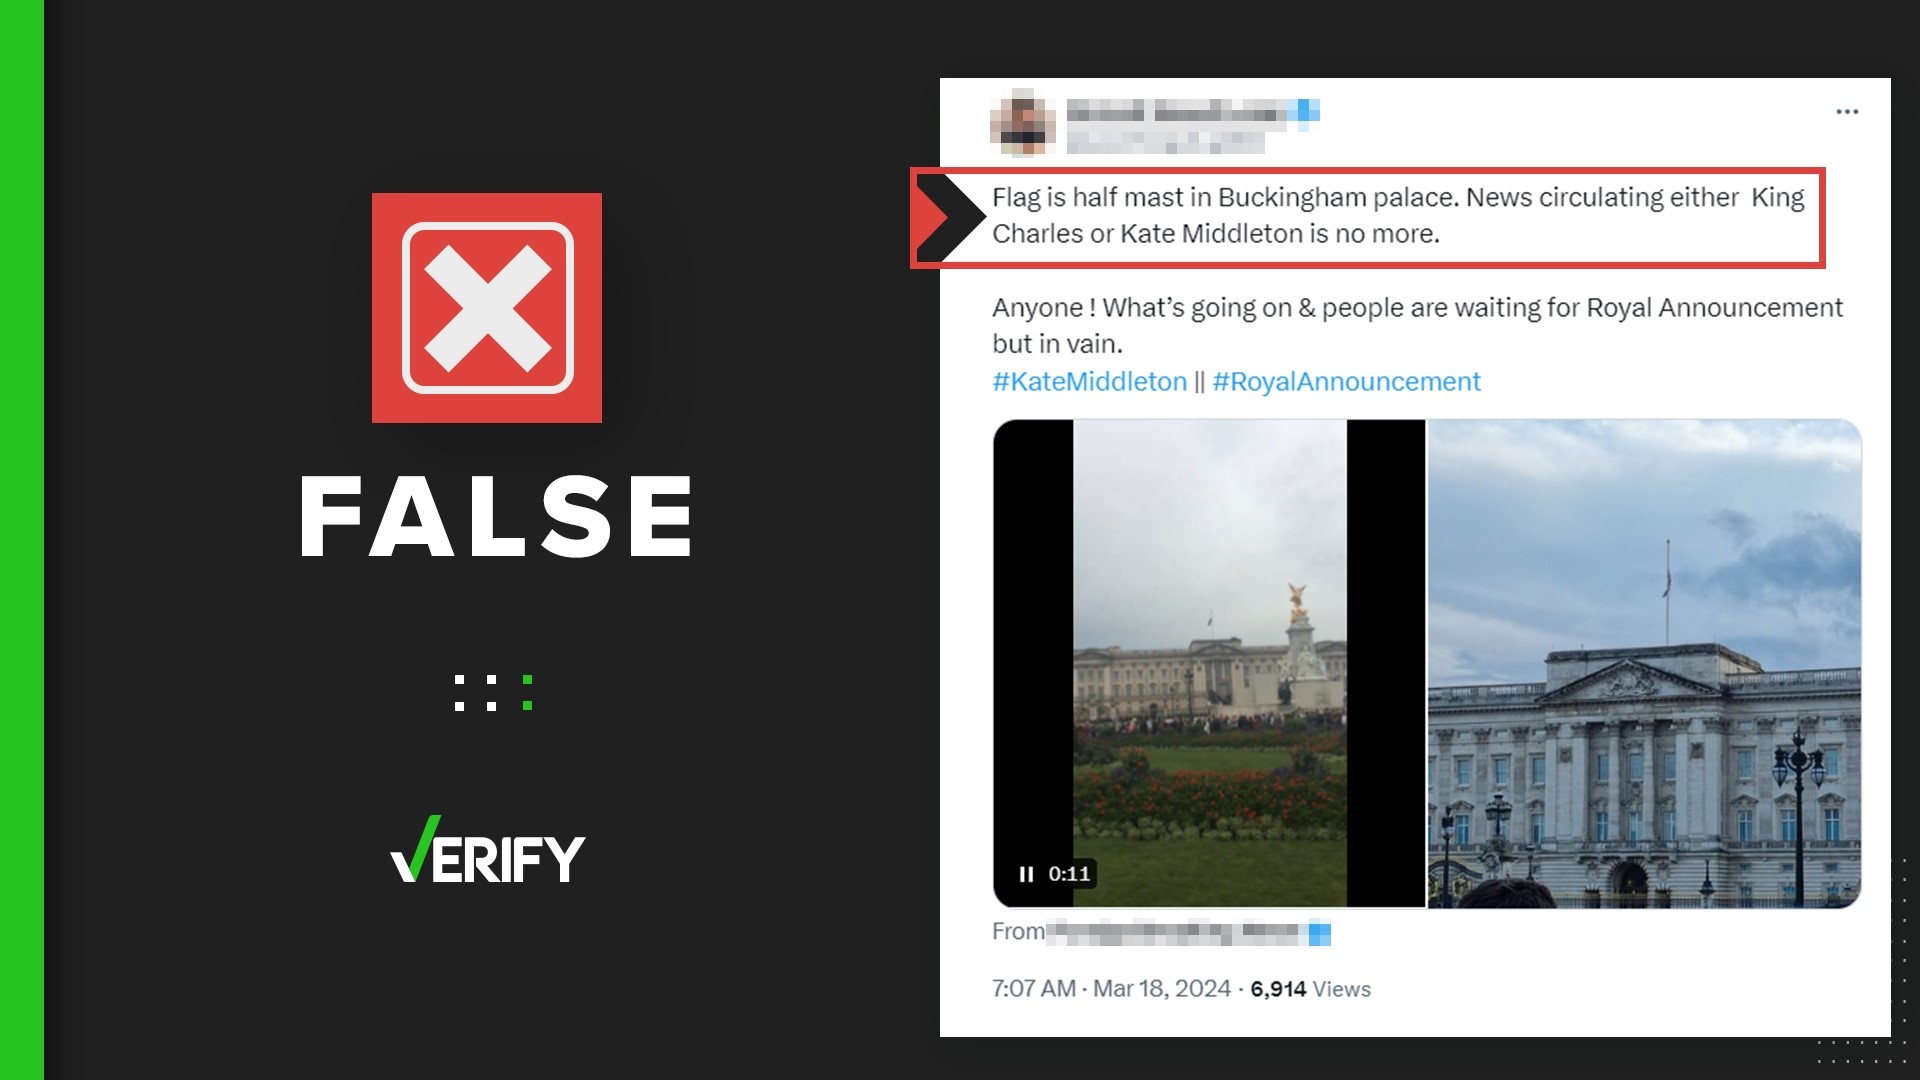 Online posts falsely claim Buckingham Palace flags at halfmast